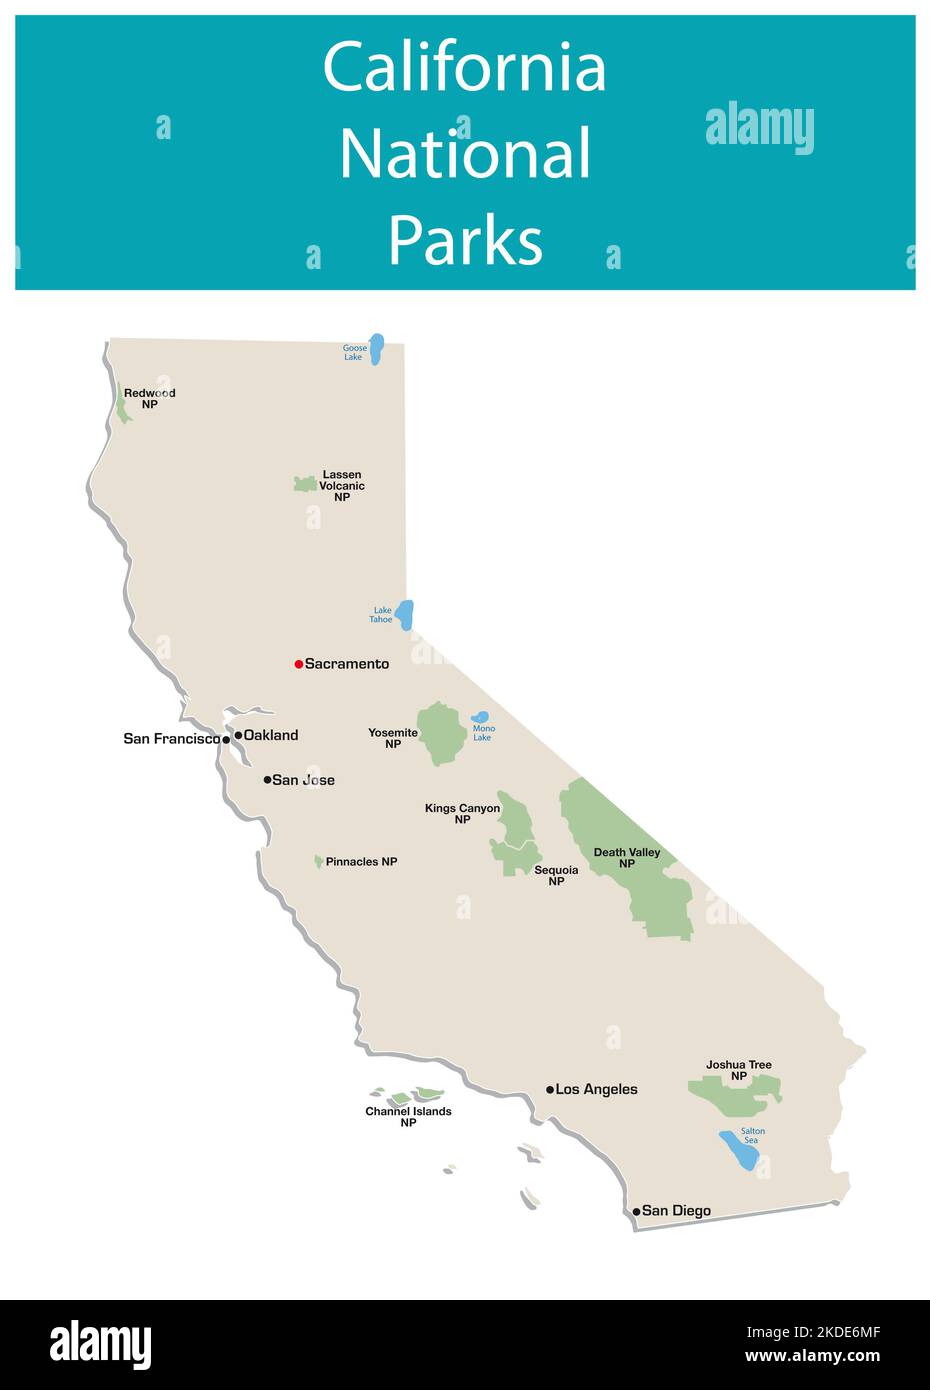 vektor-Informationskarte von kalifornien Nationalparks Stockfoto